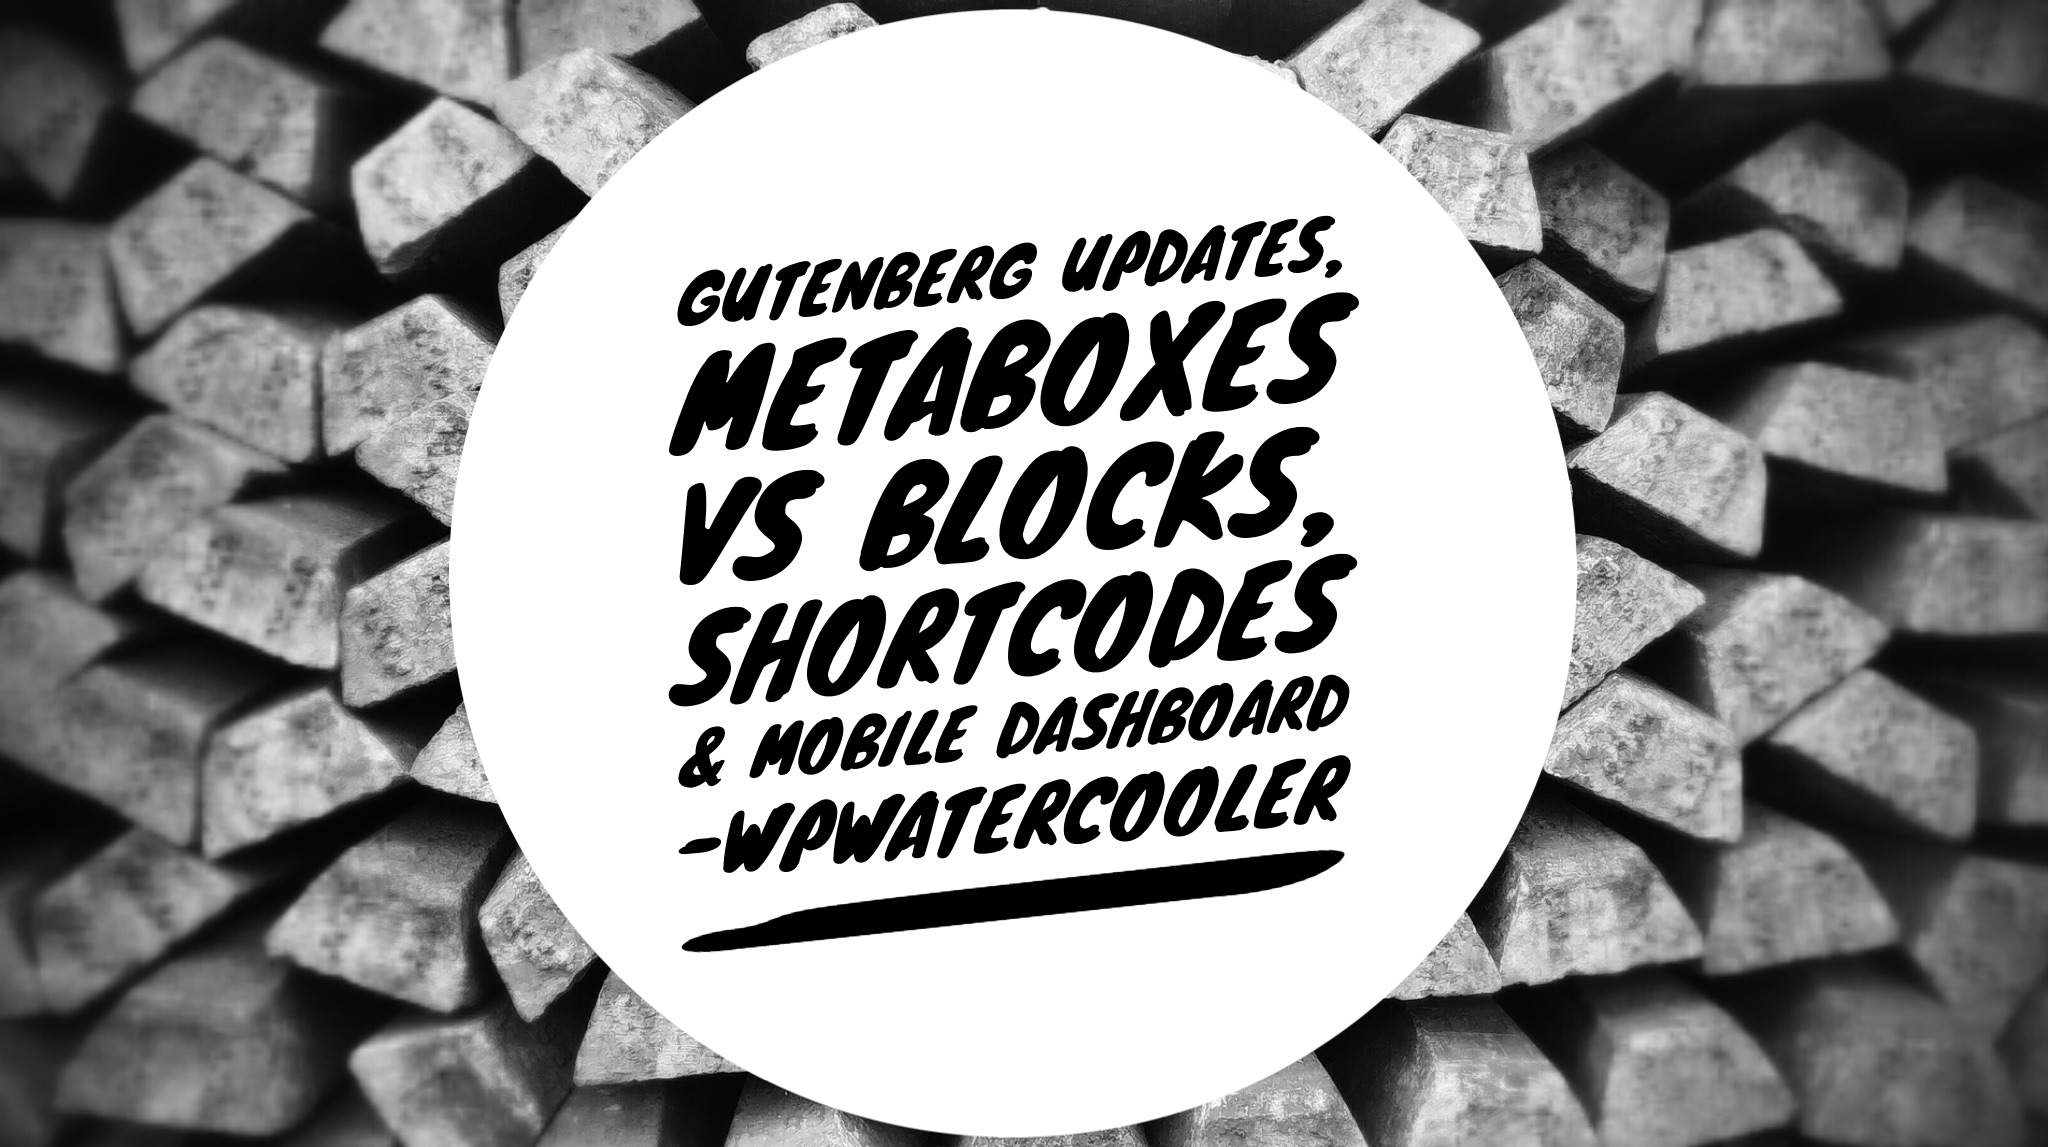 EP268 – Gutenberg Updates, Metaboxes vs Blocks, Shortcodes & Mobile Dashboard  –  WPwatercooler